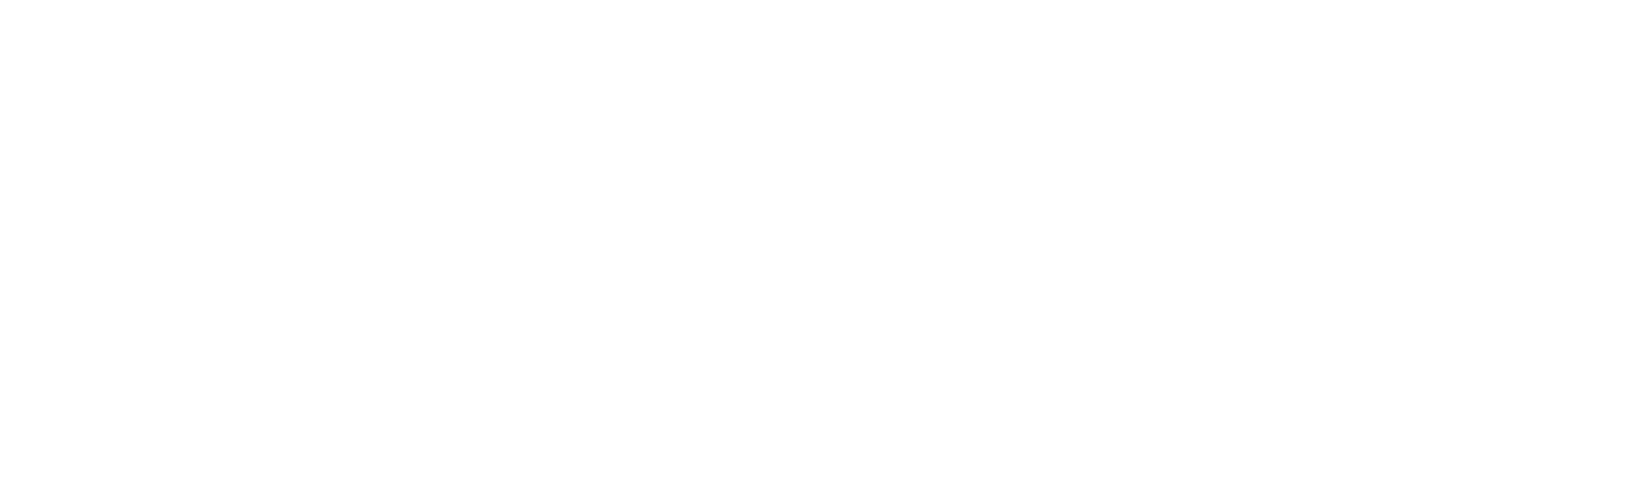 white_berkeley_lab_logo